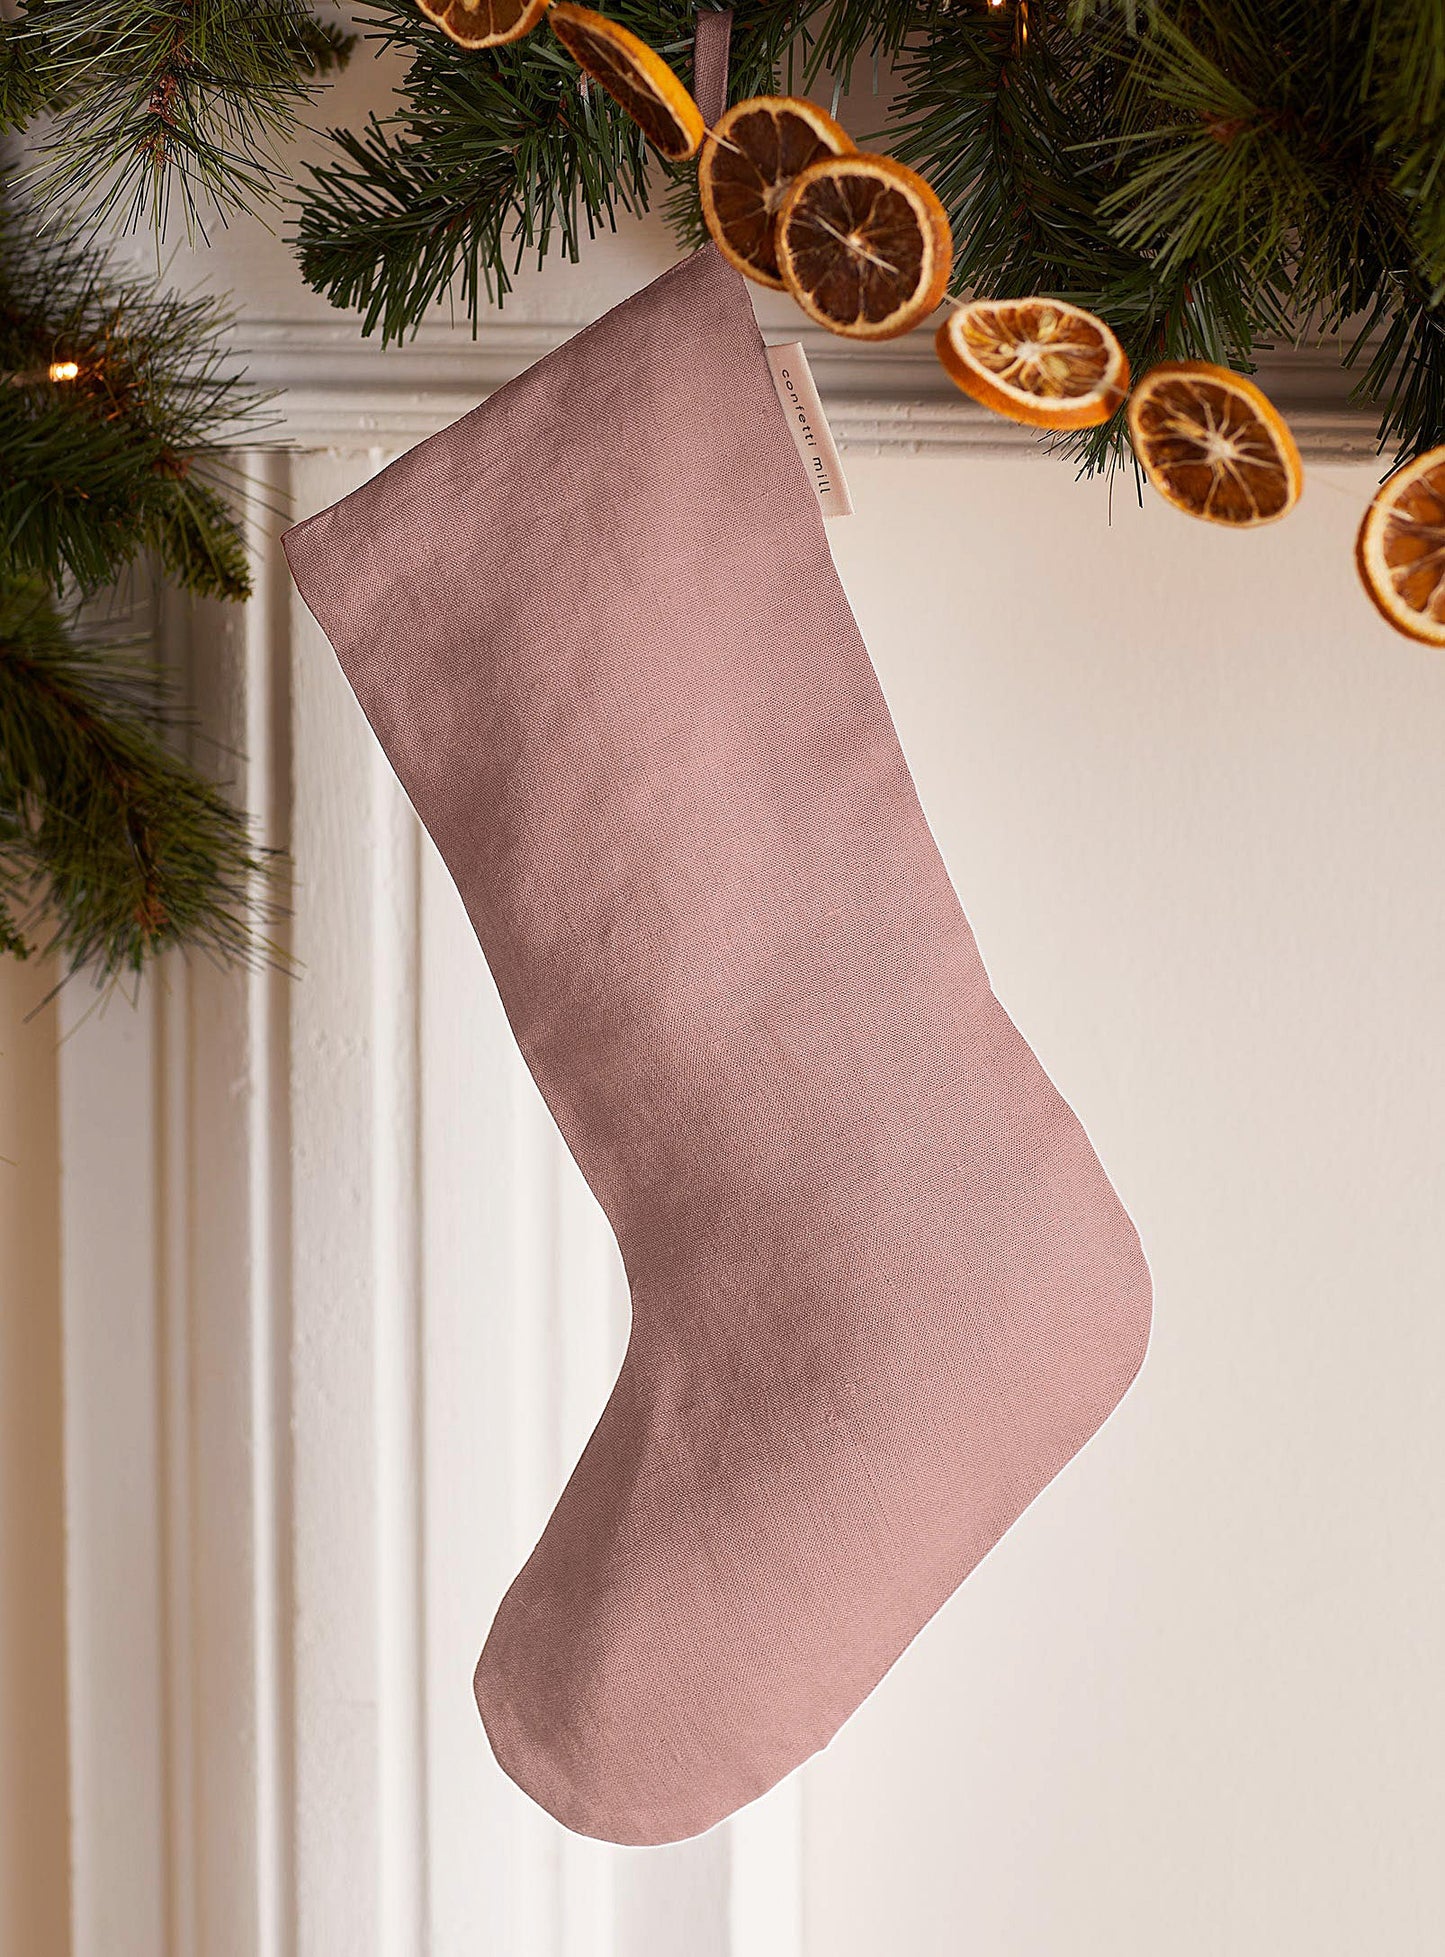 Linen Christmas stockings